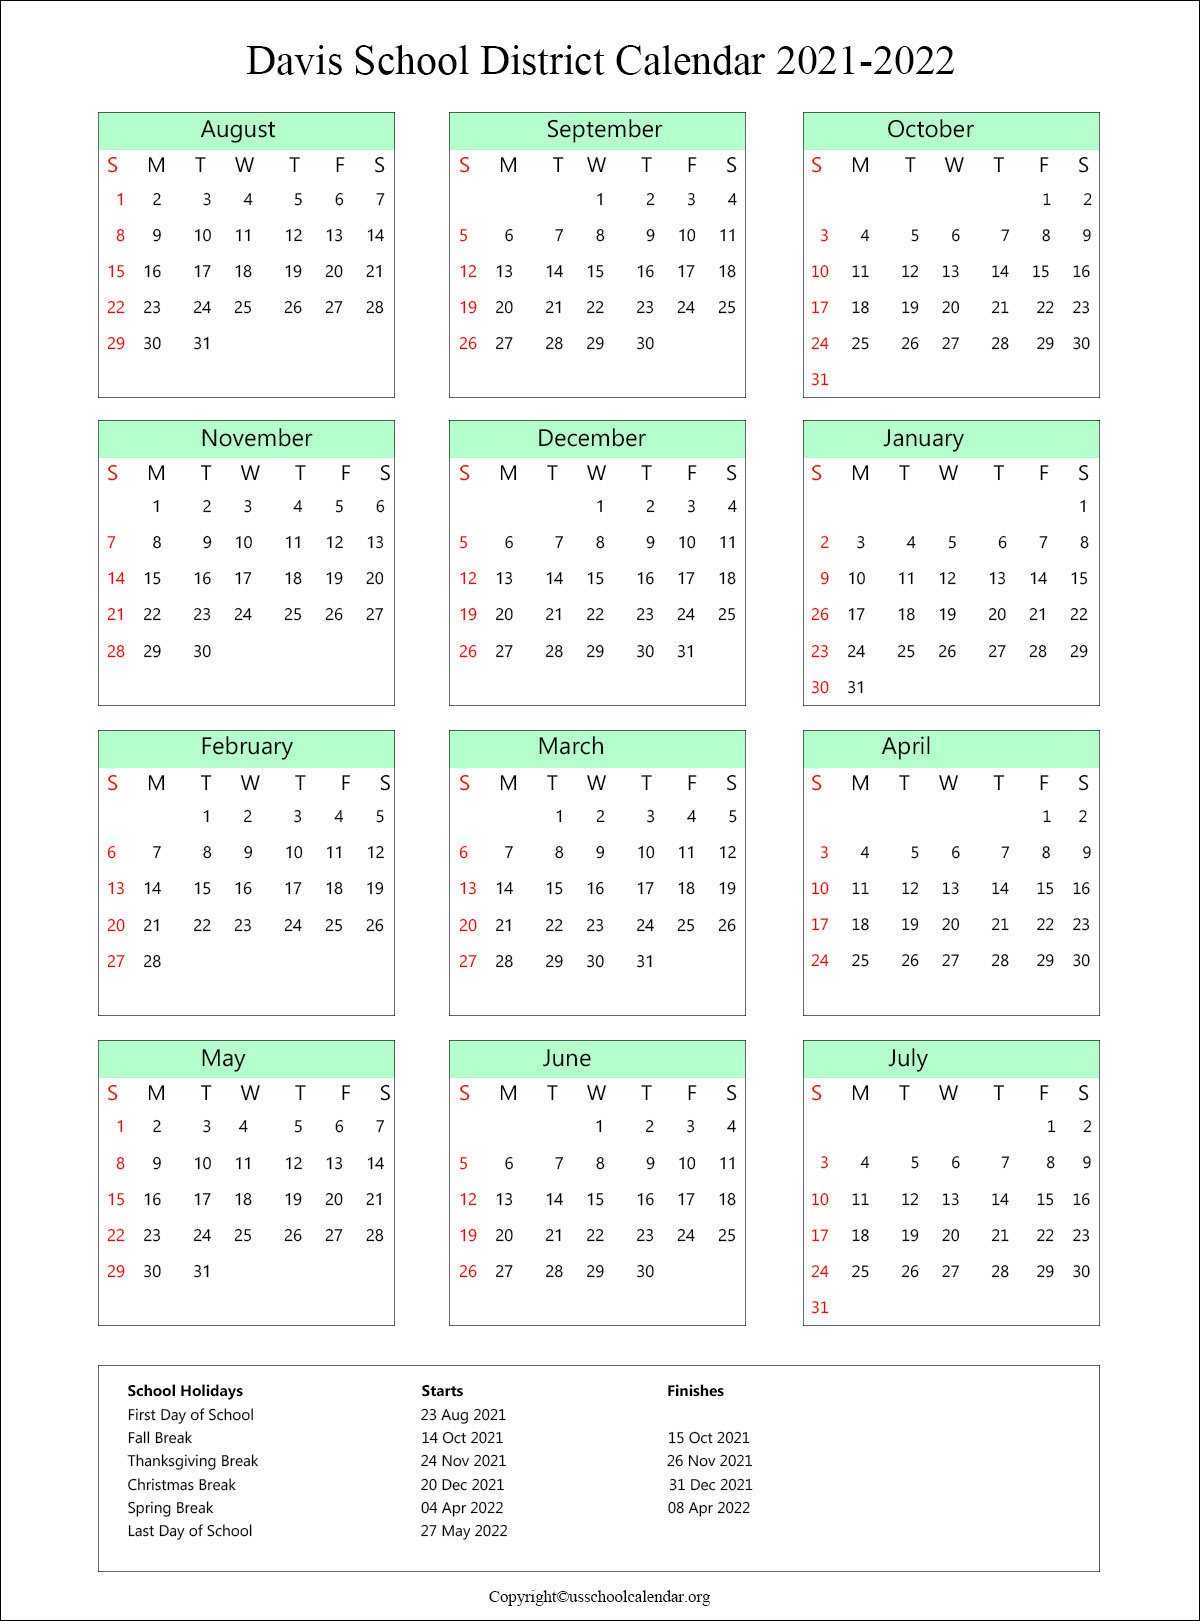 Davis Calendar 2022 Davis School District Calendar With Holidays 2021-2022